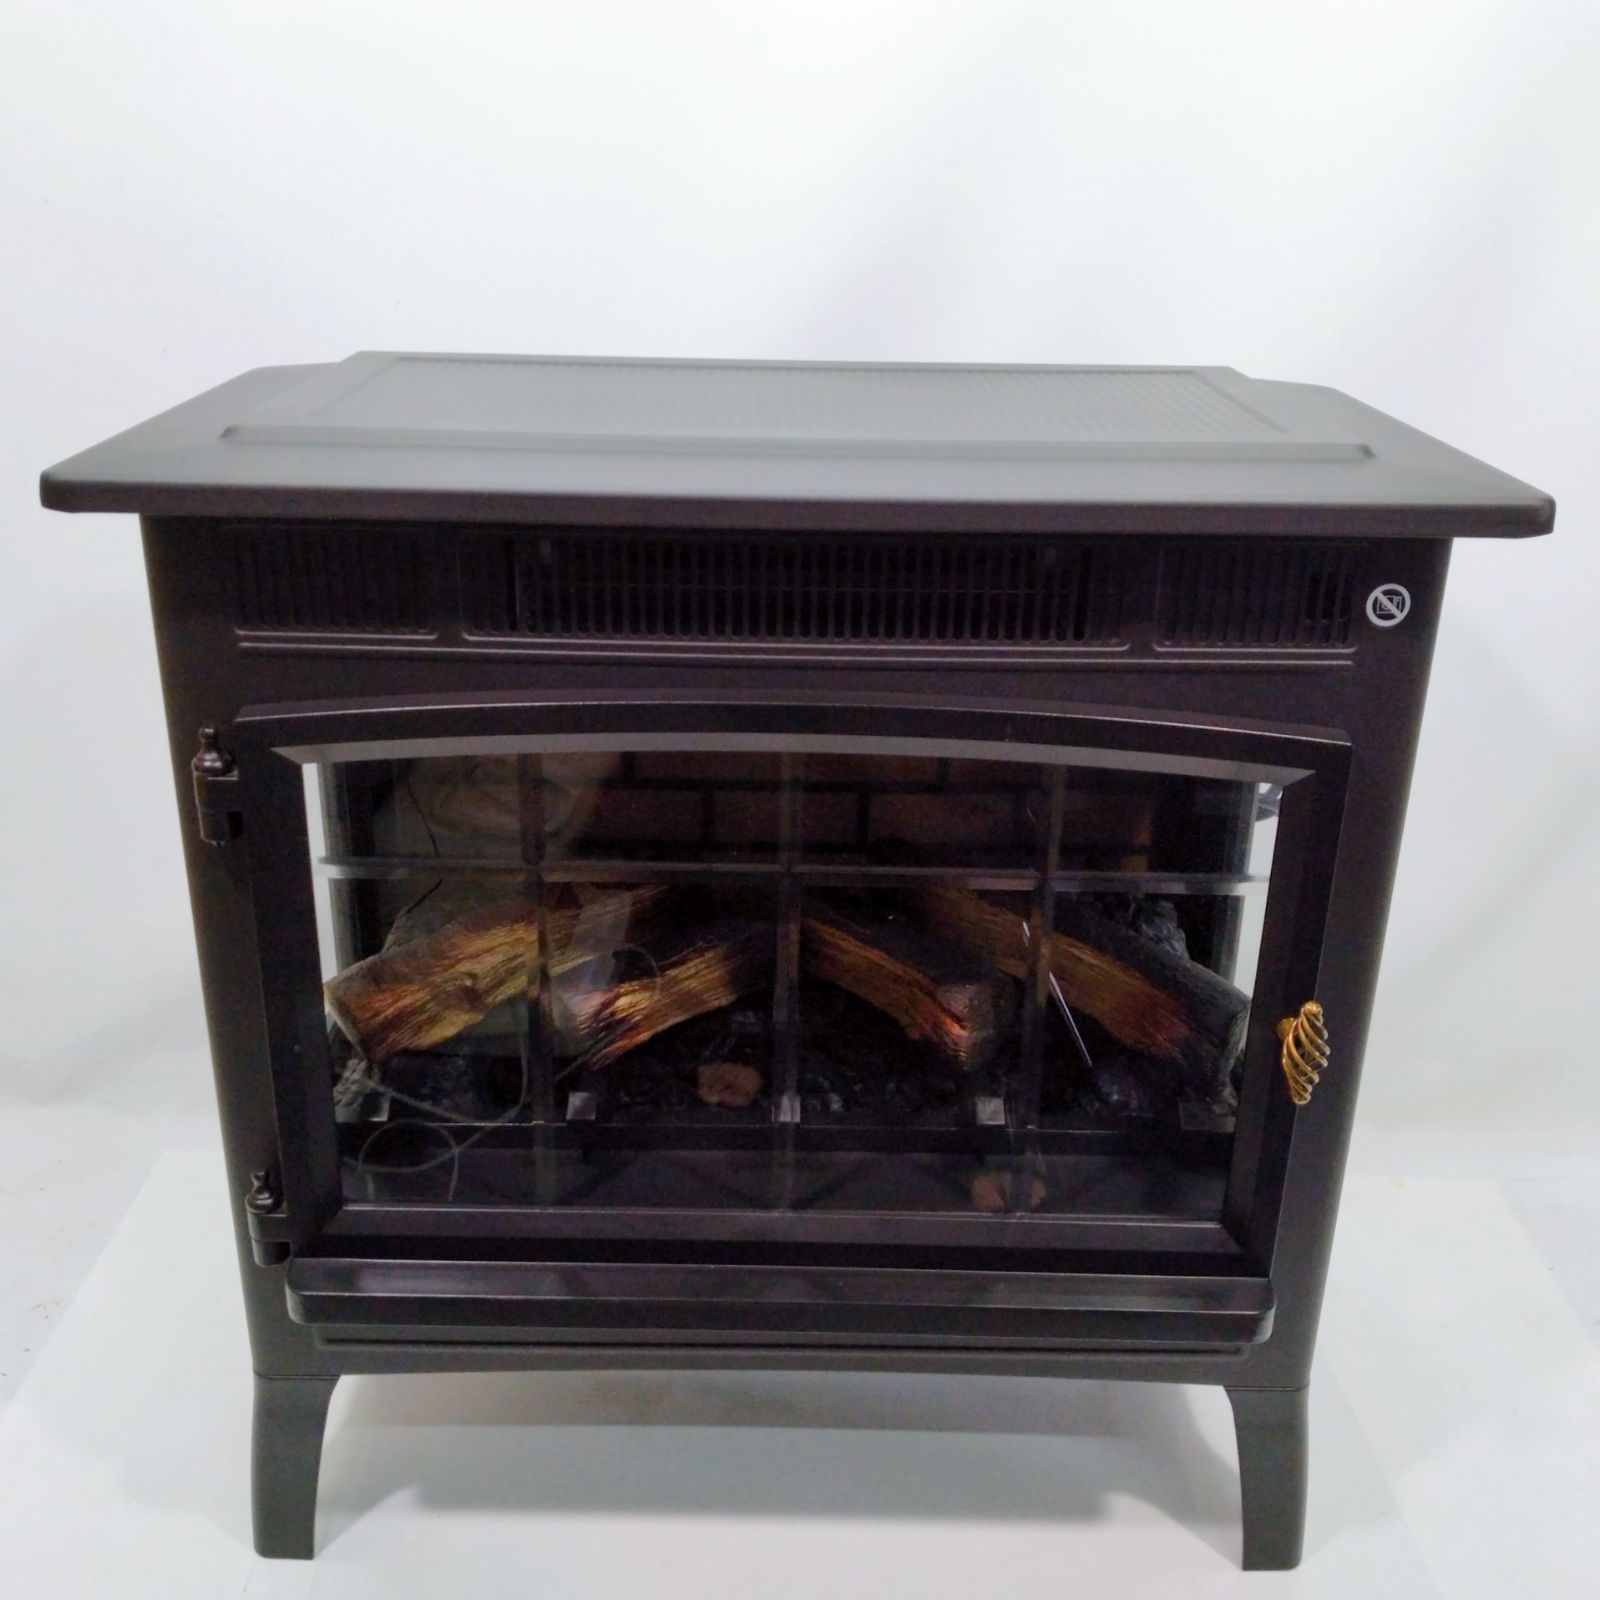 Duraflame デュラフレイム 暖炉 DFI-5010-01 - 空調